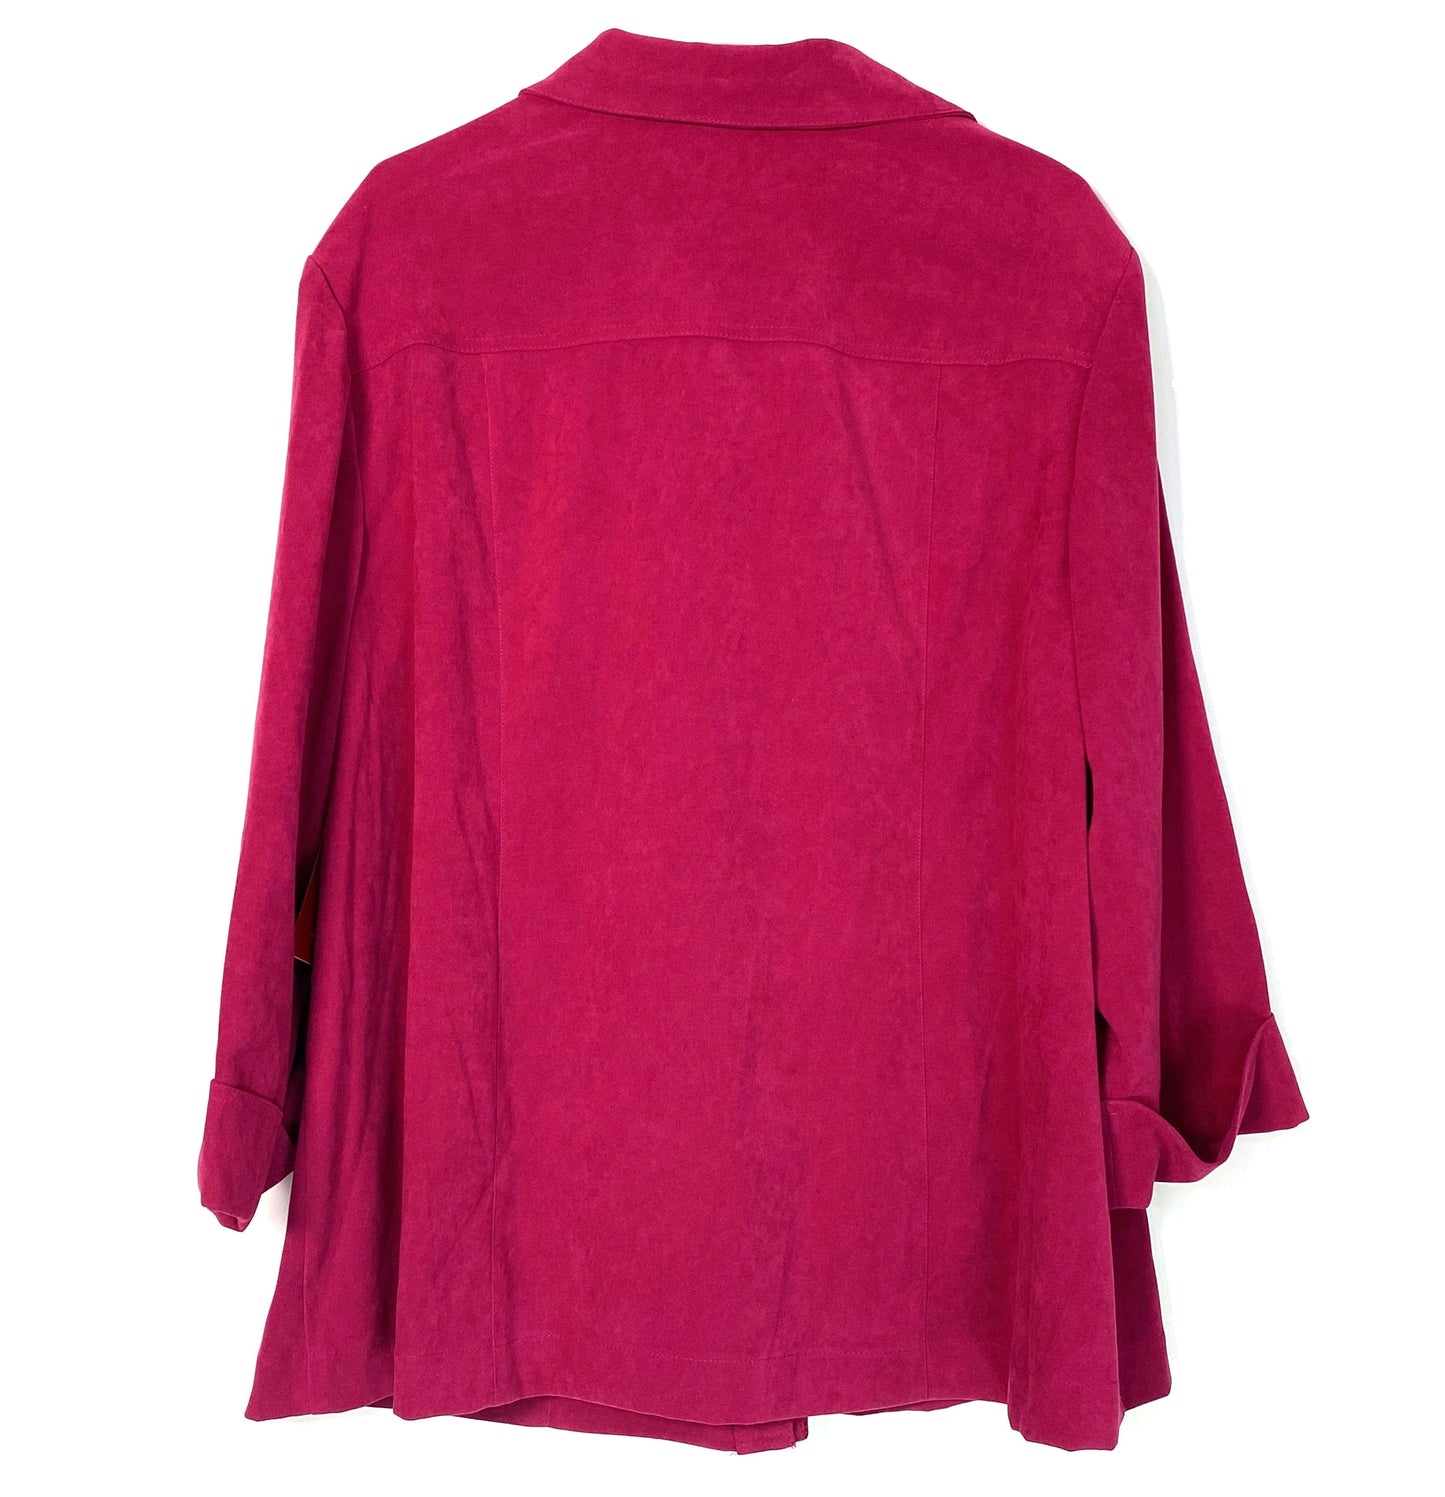 JM Collection Woman Womens Size 22W Pink Button-Up Top Blouse Shirt L/s